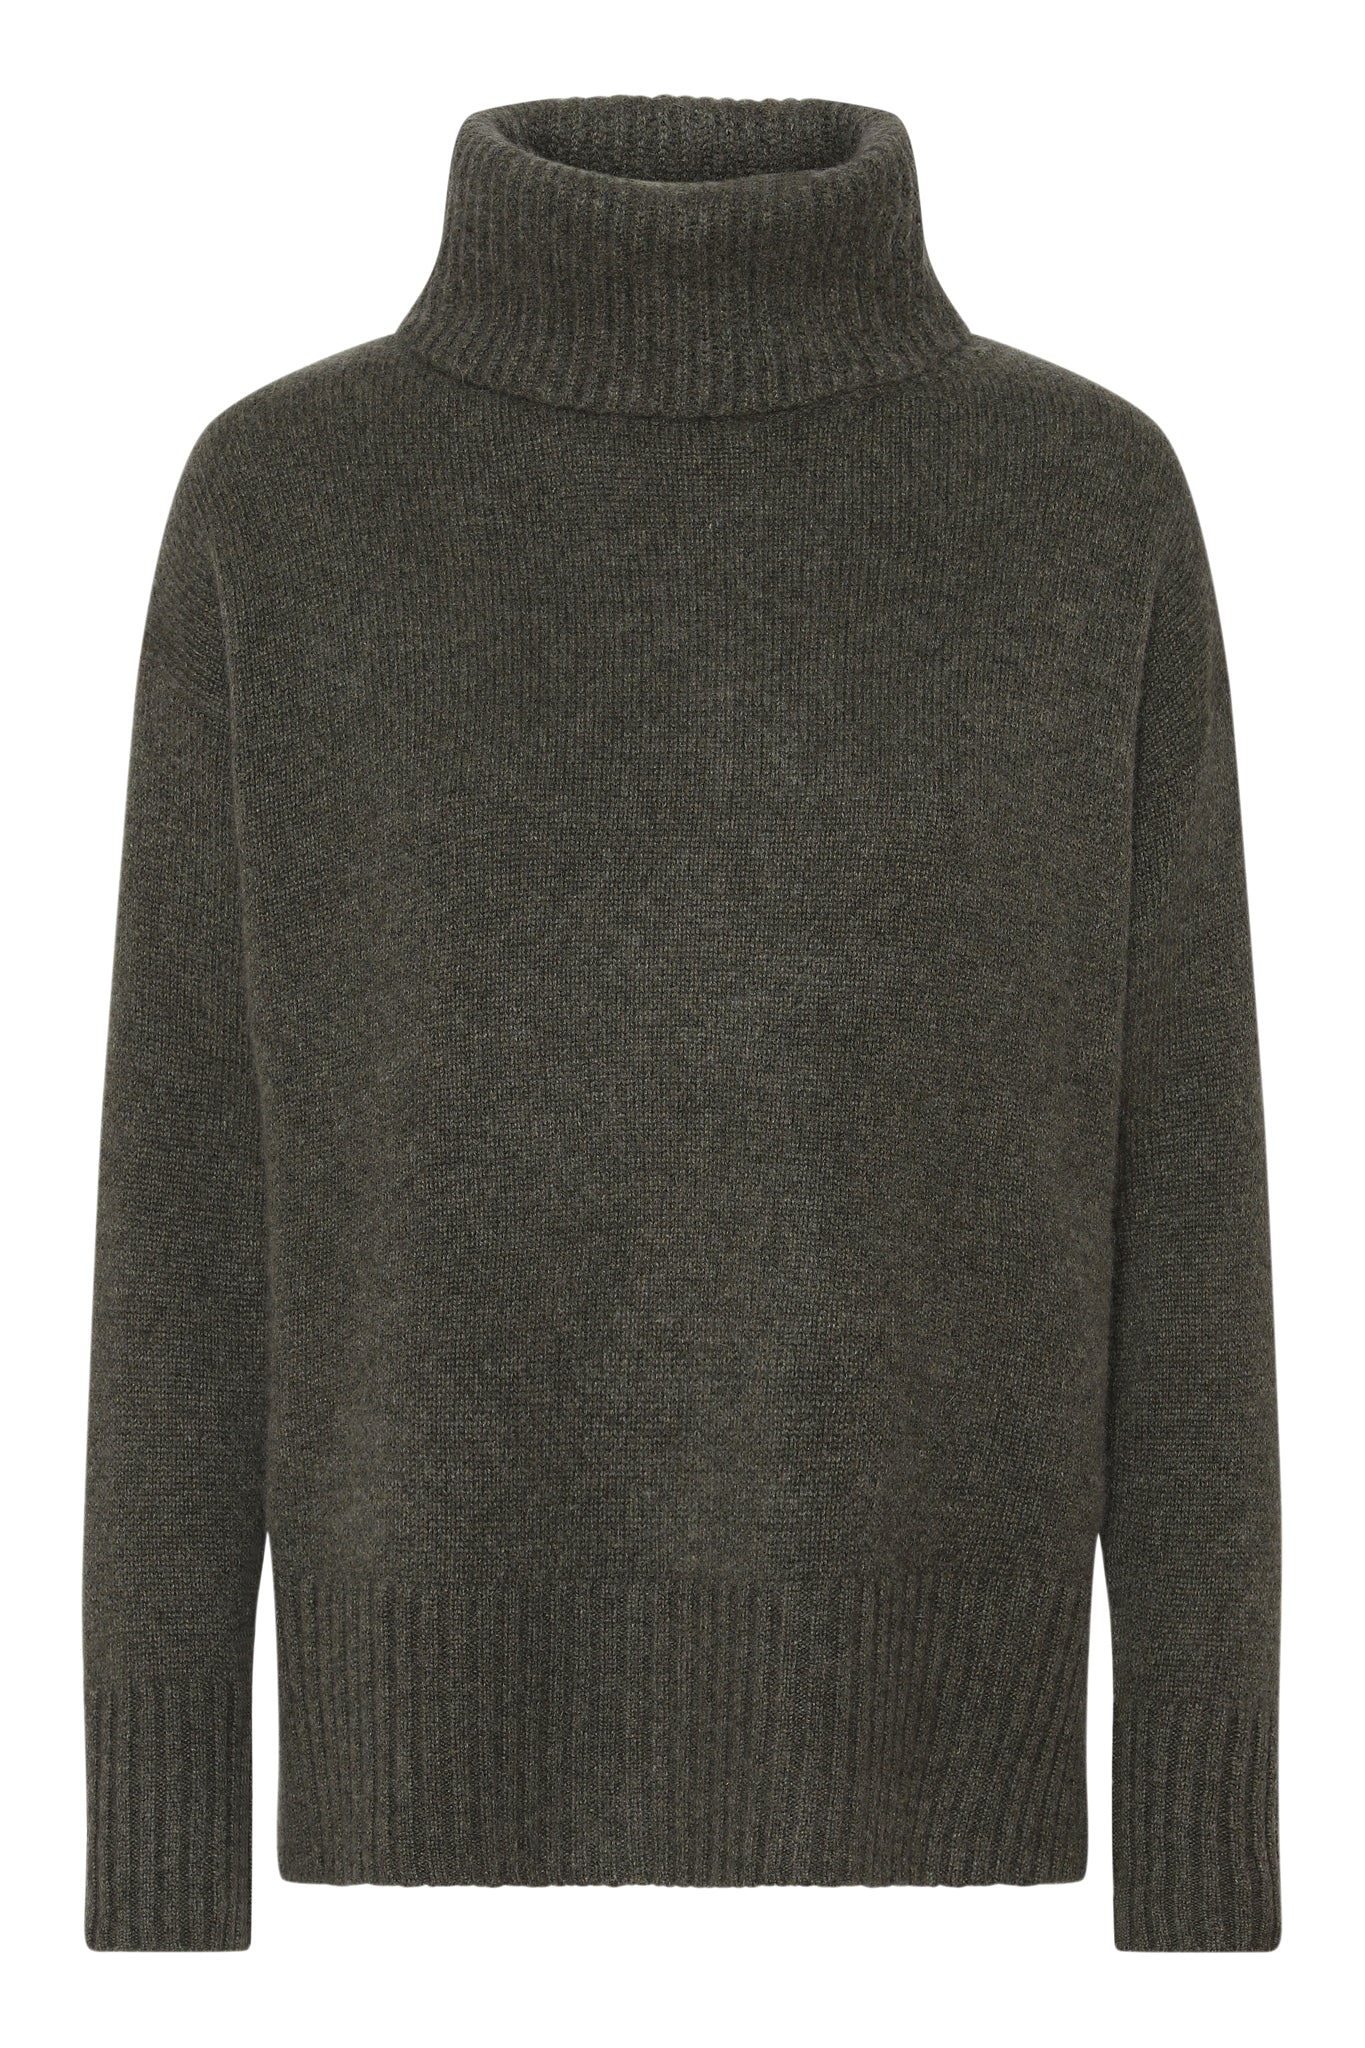 Armygrøn cashmere turtleneck sweater, fra Danske Pure Cashmere Copenhagen